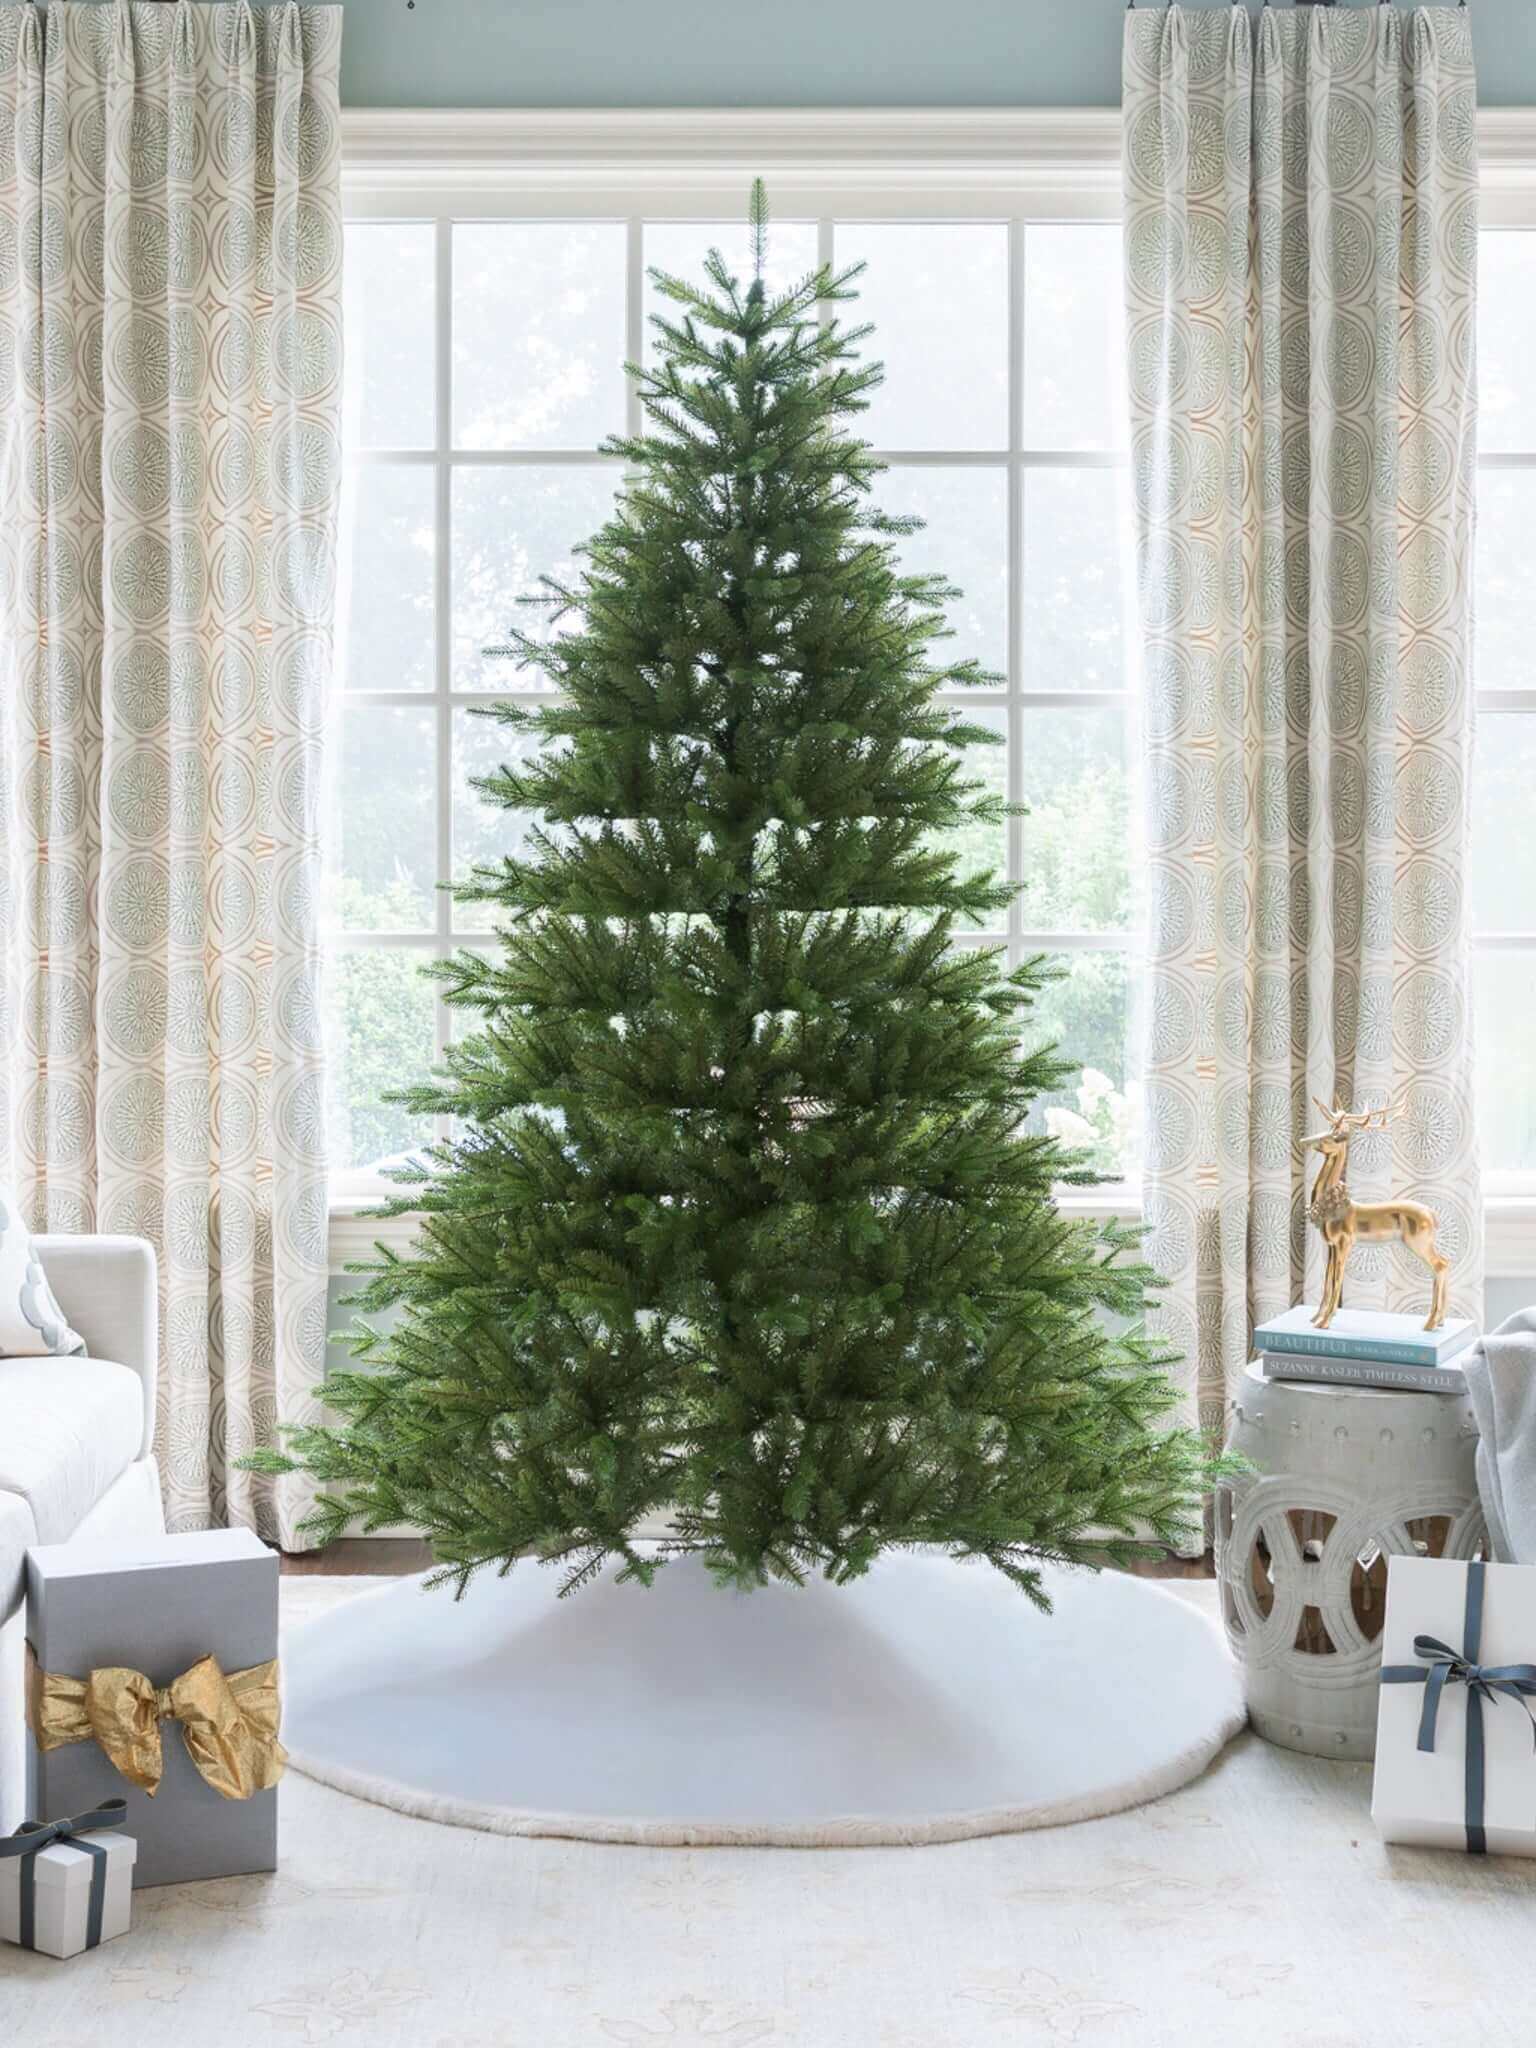 King of Christmas 9' Alpine Fir Tree 1100 Warm White Led Lights